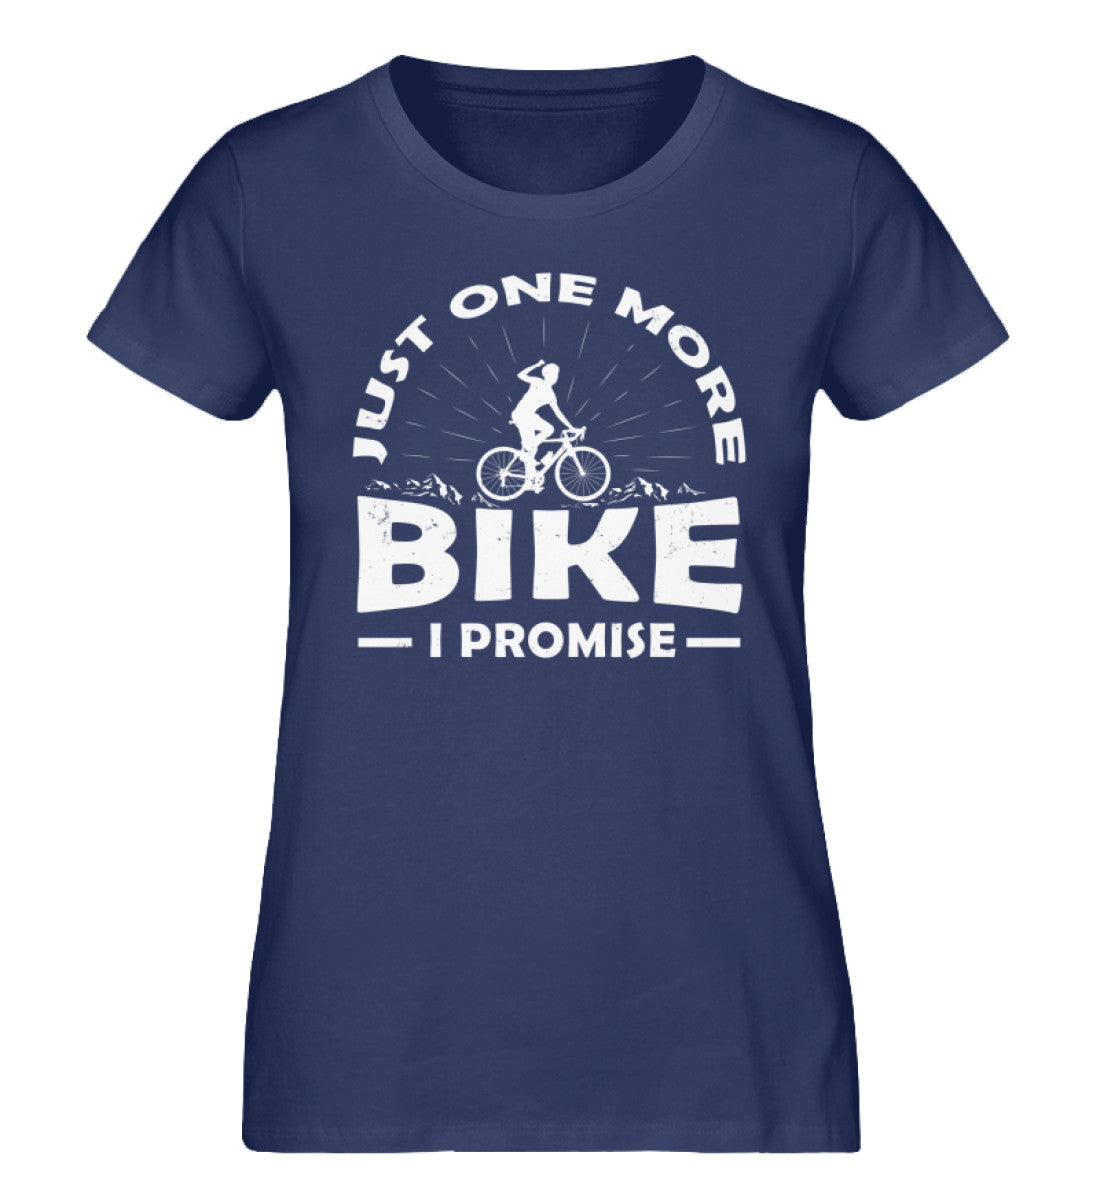 Just one more bike, i promise - Damen Organic T-Shirt fahrrad Navyblau